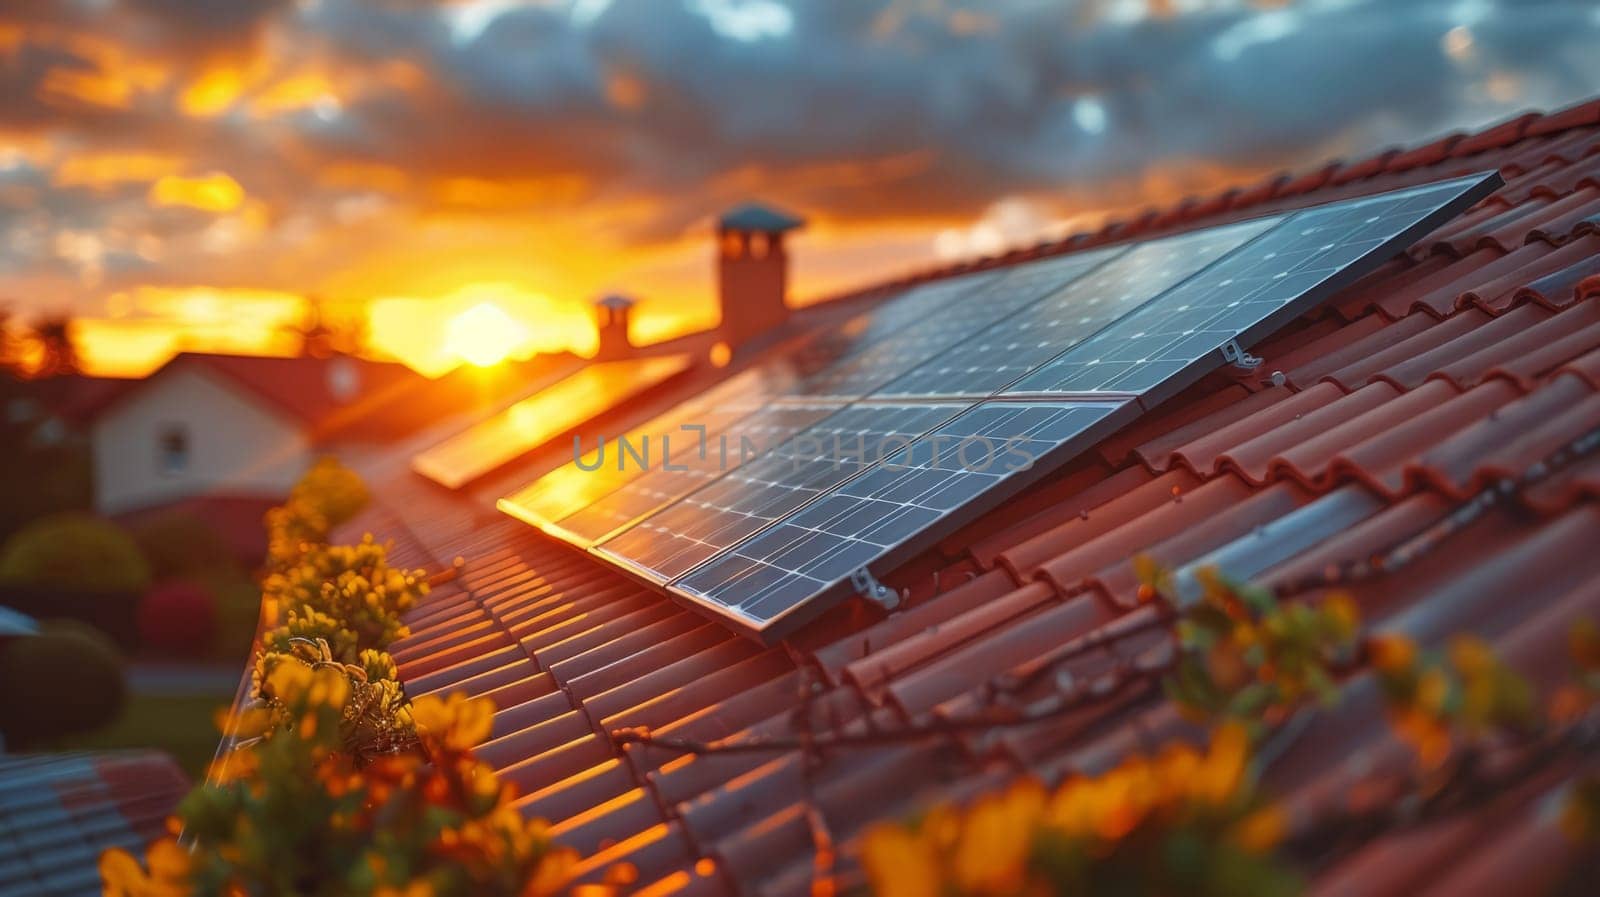 Solar Panels on House Roof at Sunset. Solar Energy Alternative Energy Renewable Concept. Photovoltaic Technology by iliris